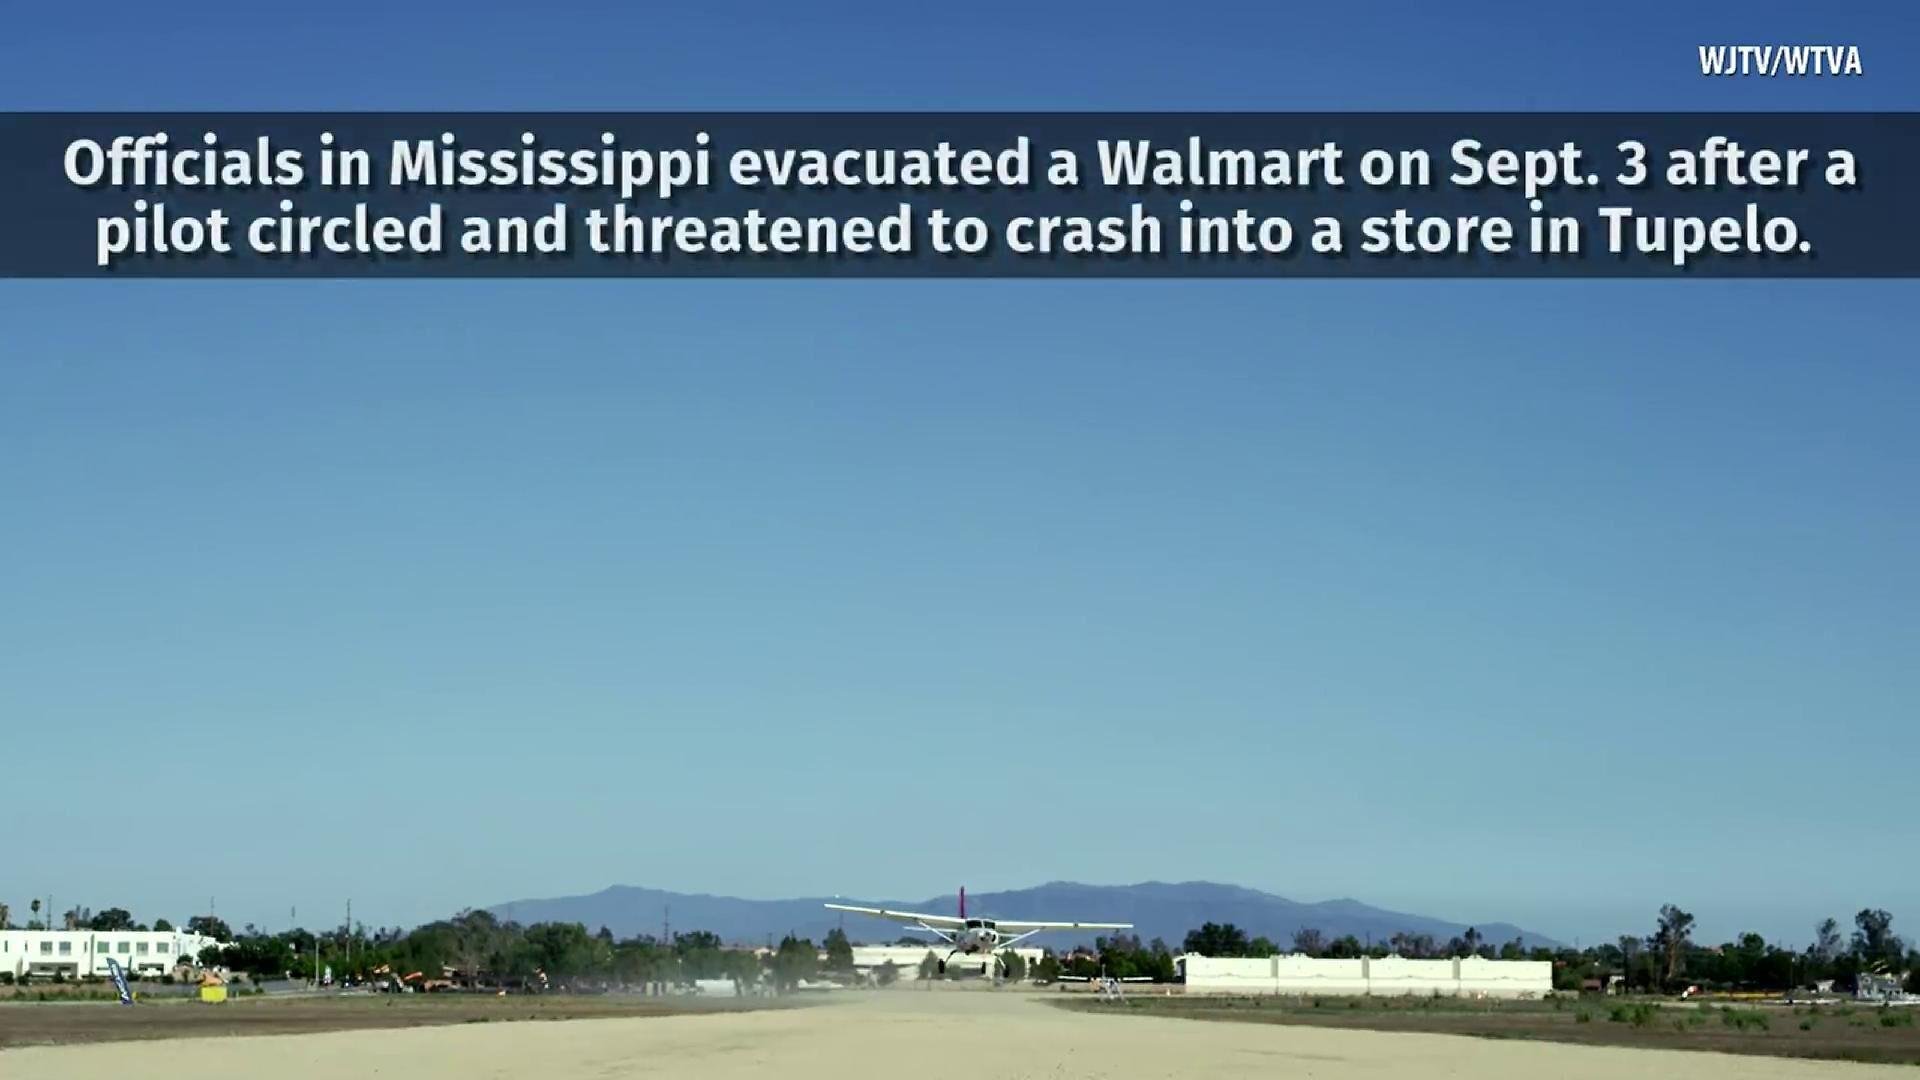 Man who threatened to crash plane into Walmart in Mississippi dies